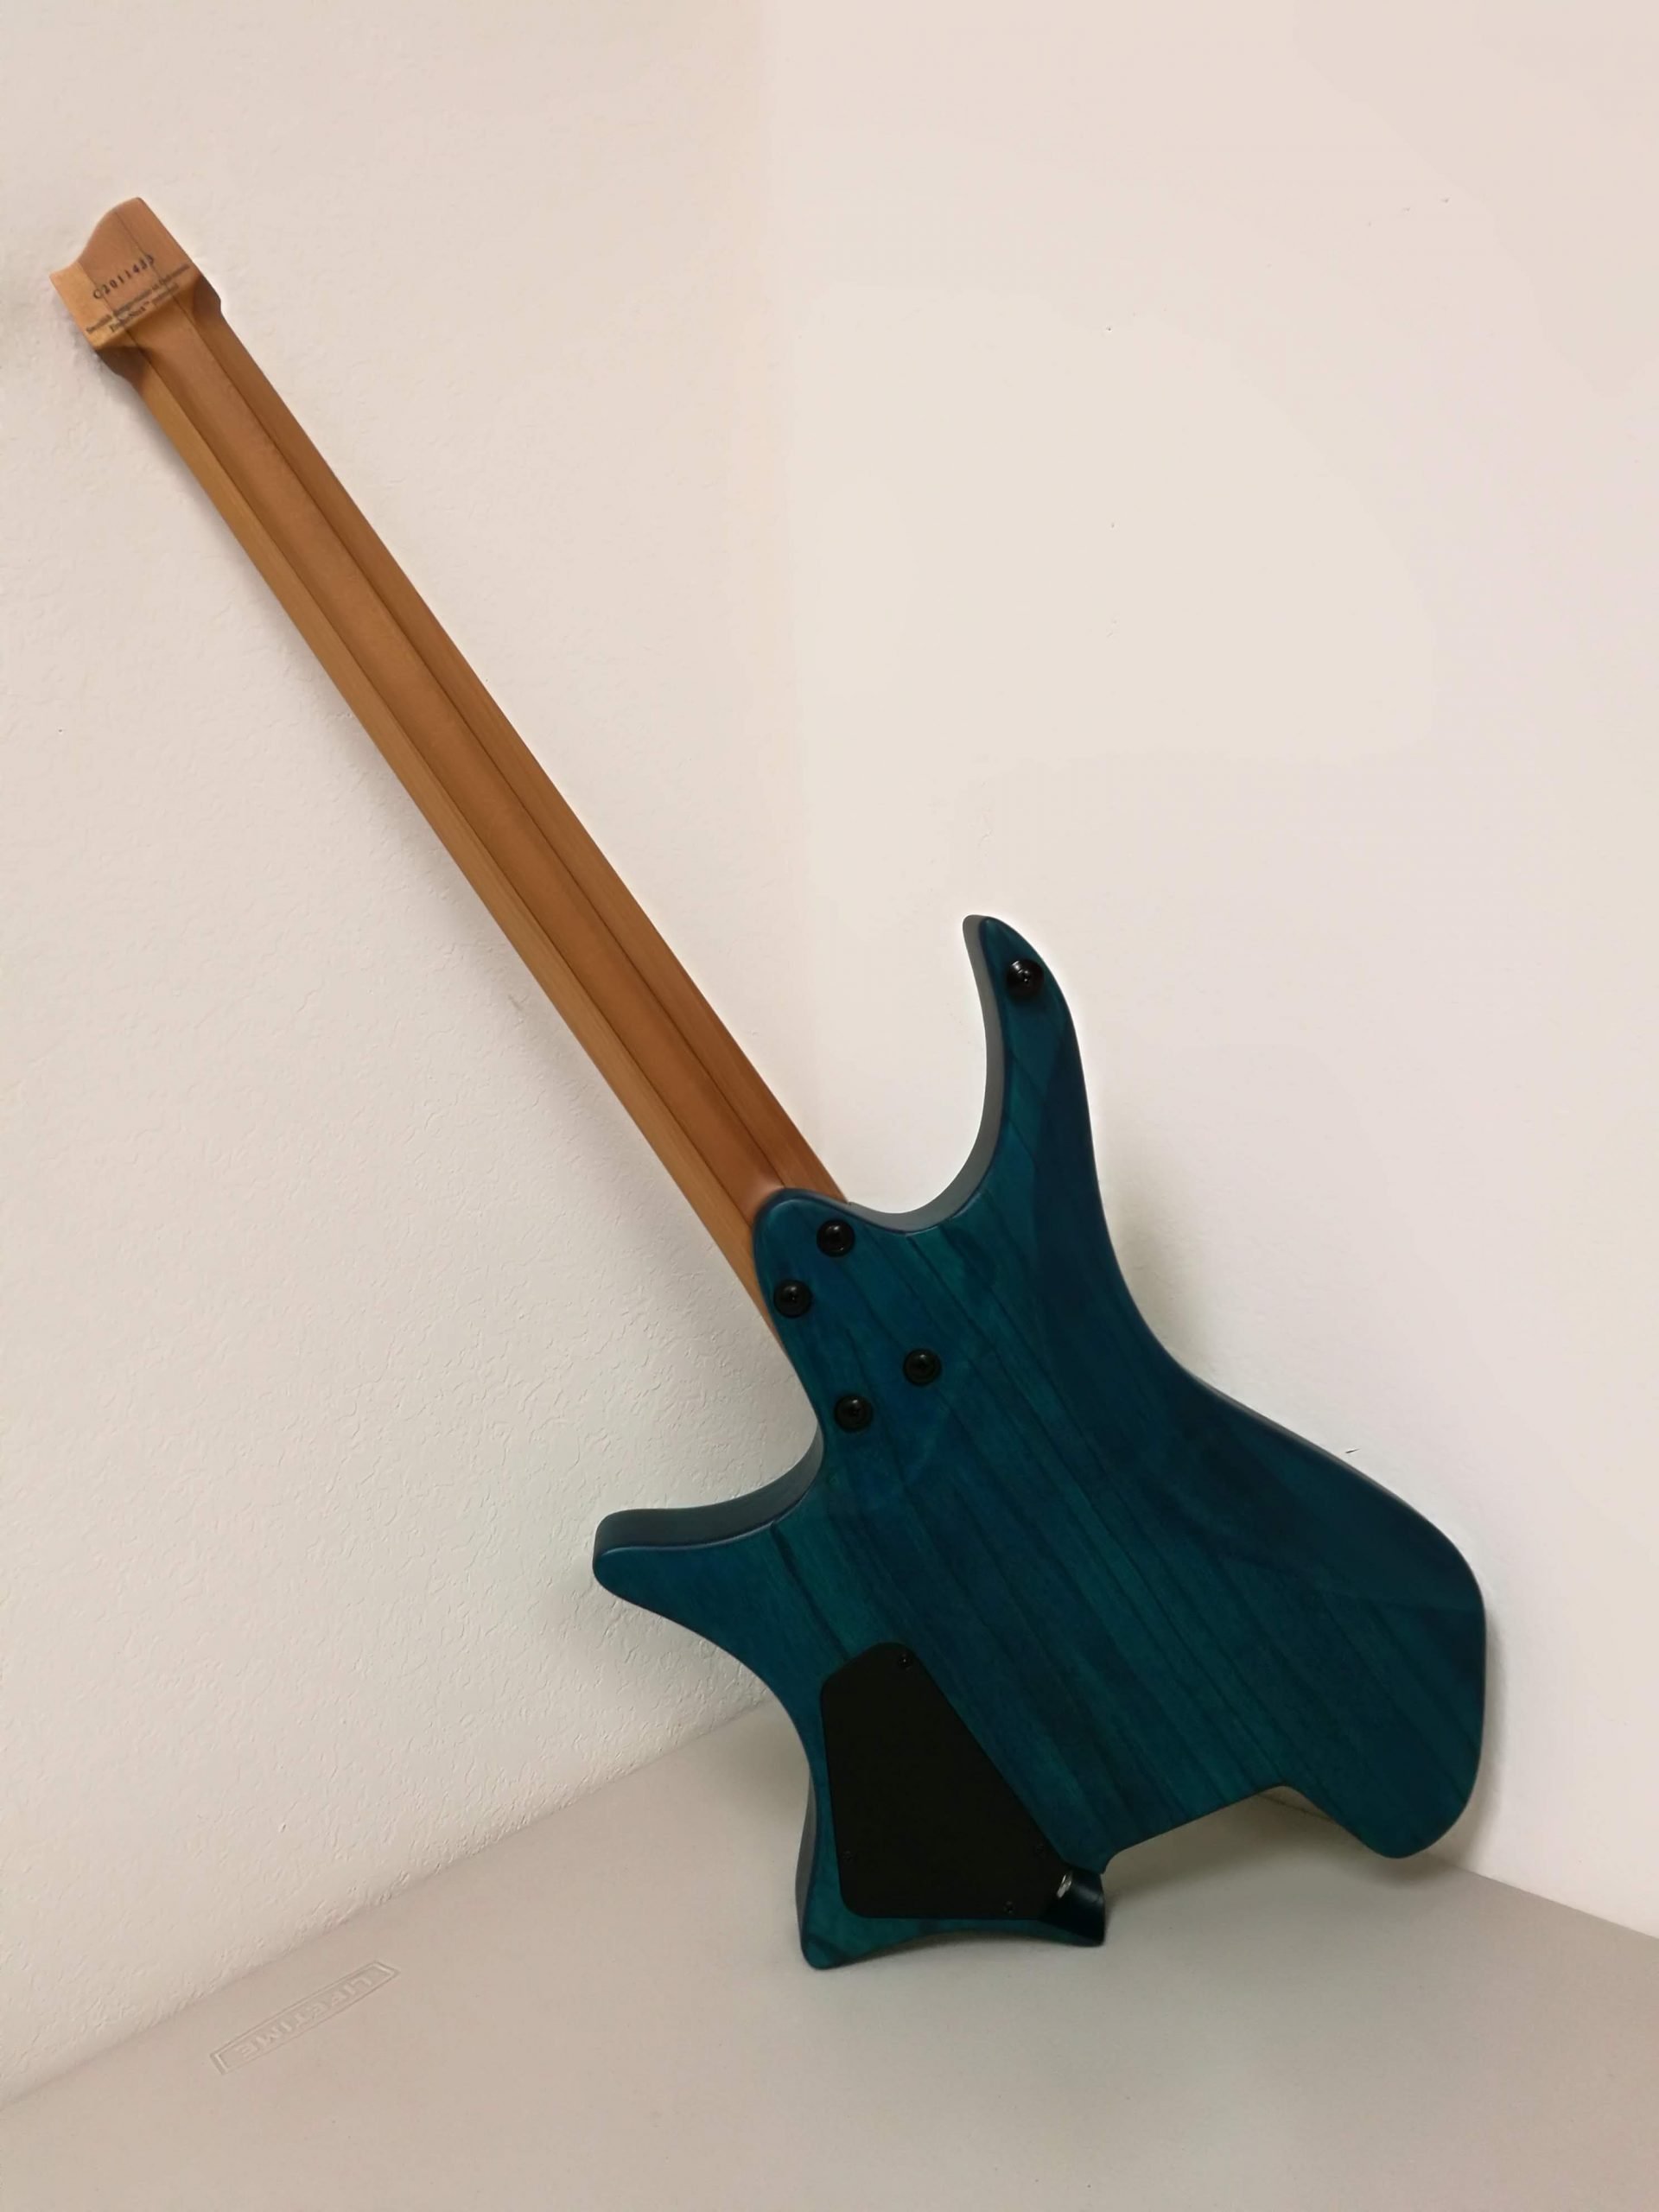 Boden Original 6 Blue Refurb | .strandberg* Guitars